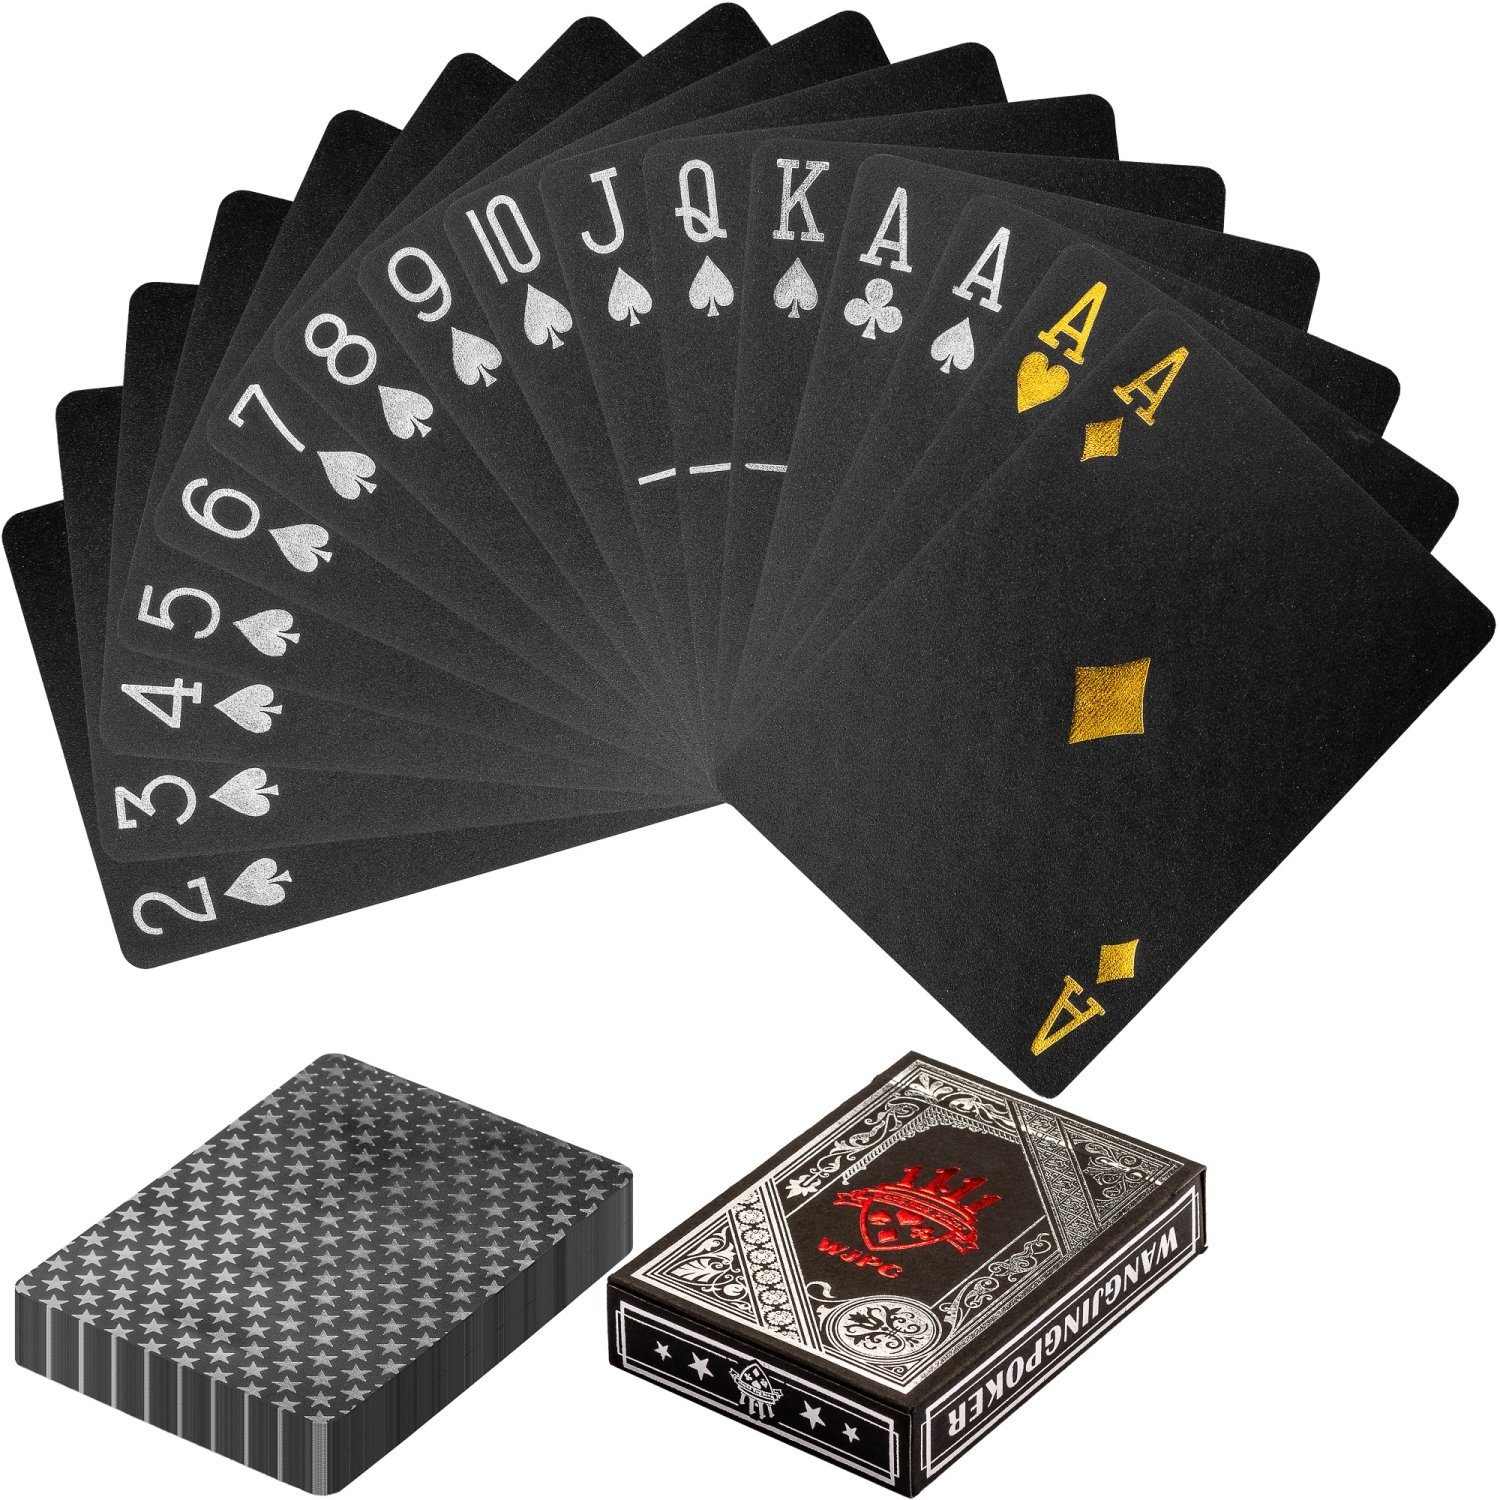 GAMES PLANET Spielesammlung, Games Planet® Design Pokerkarten aus Kunststoff, Varianten: Gold / Black Gold / Black Silver, Poker Plastik Spielkarten Schwarz - Silber